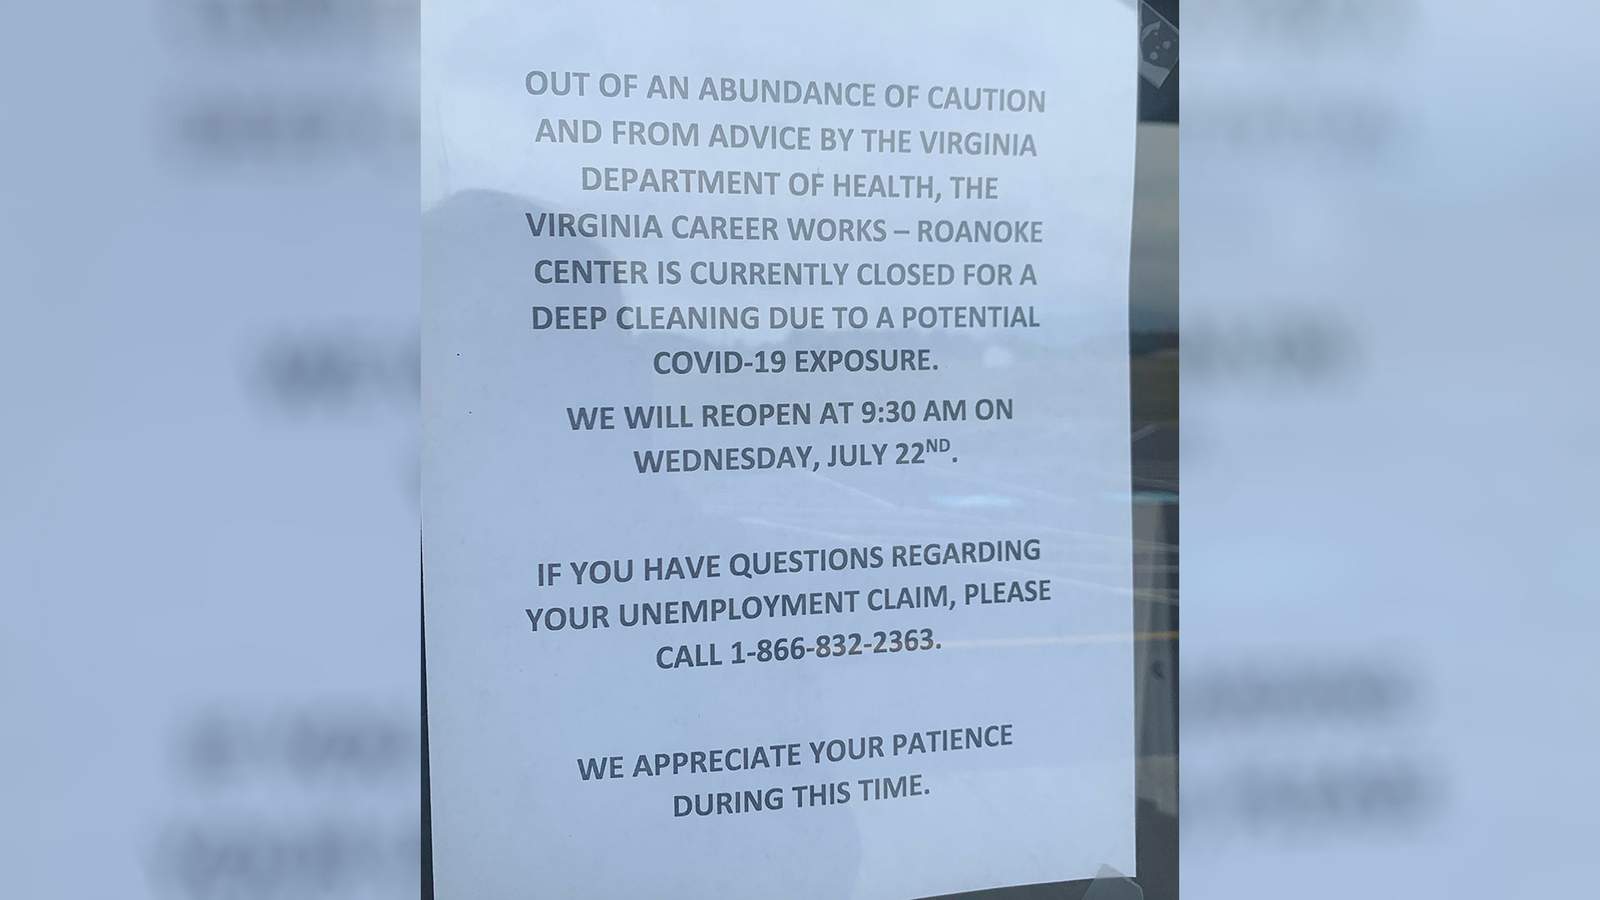 Virginia Career Works in Roanoke closed due to possible coronavirus exposure